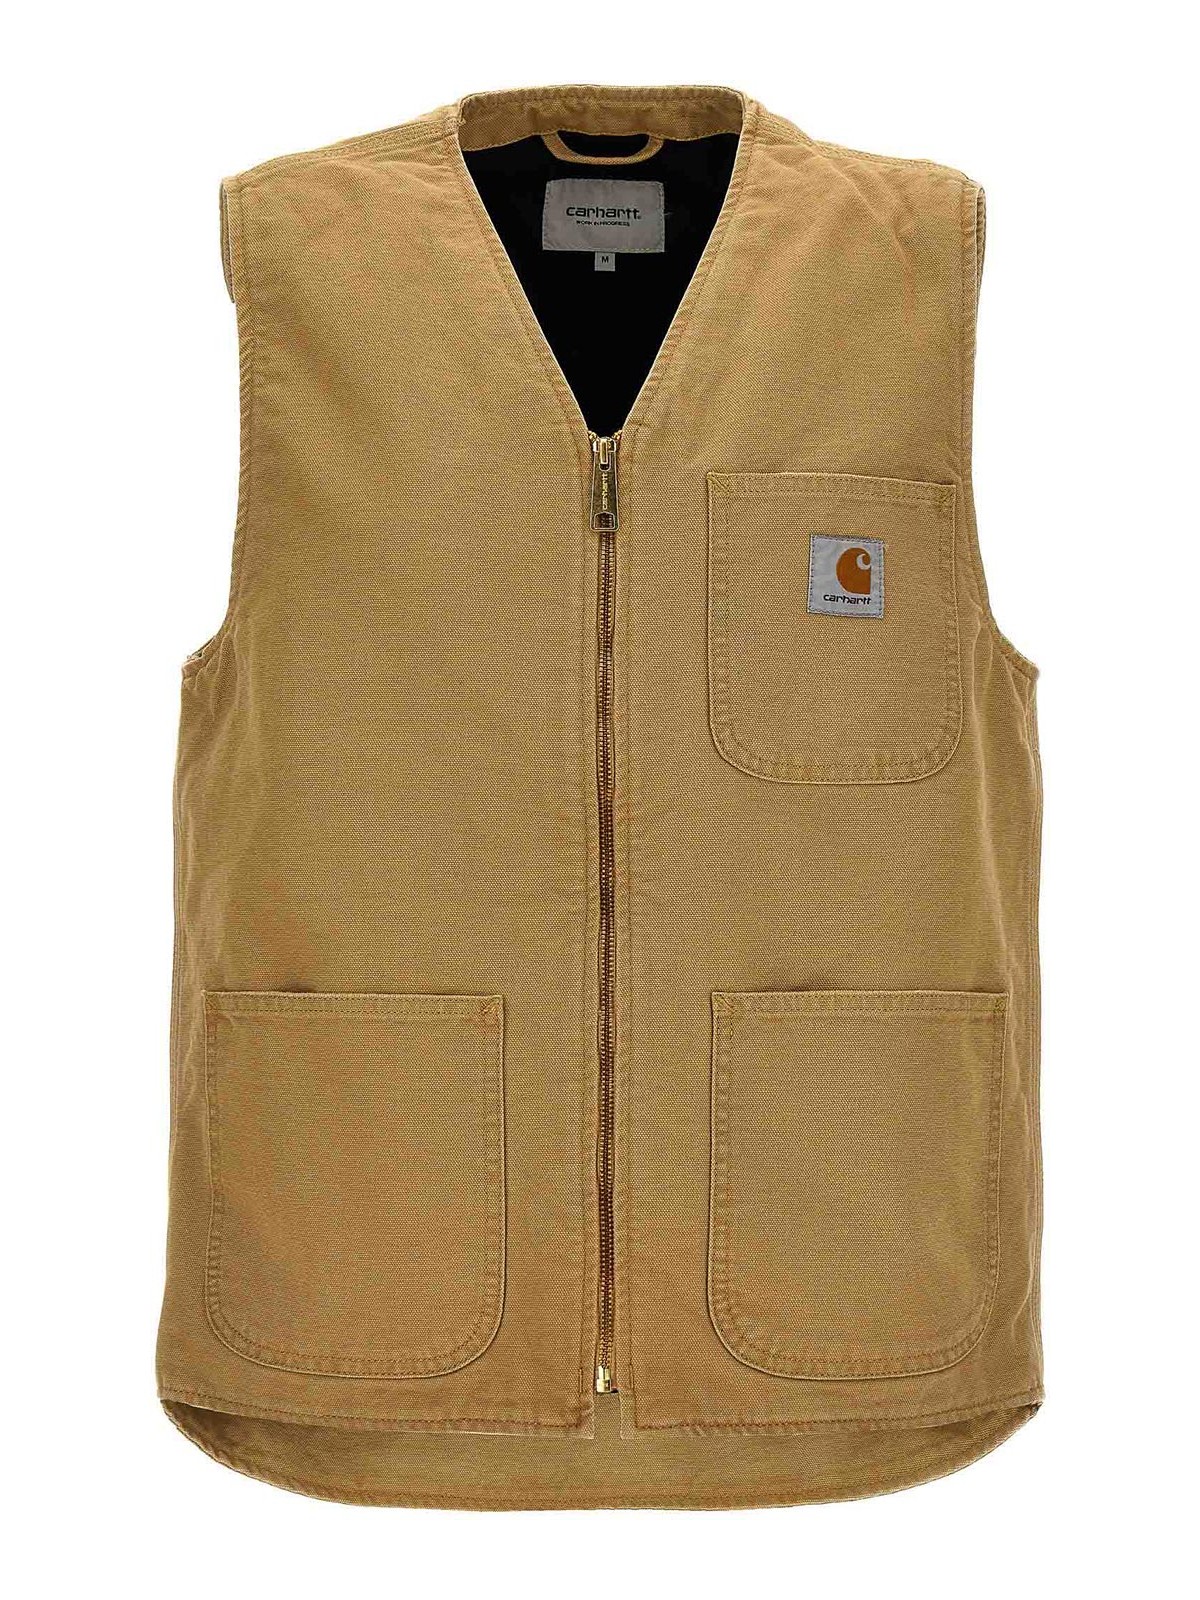 Carhartt Arbor Vest With Pockets In Beige